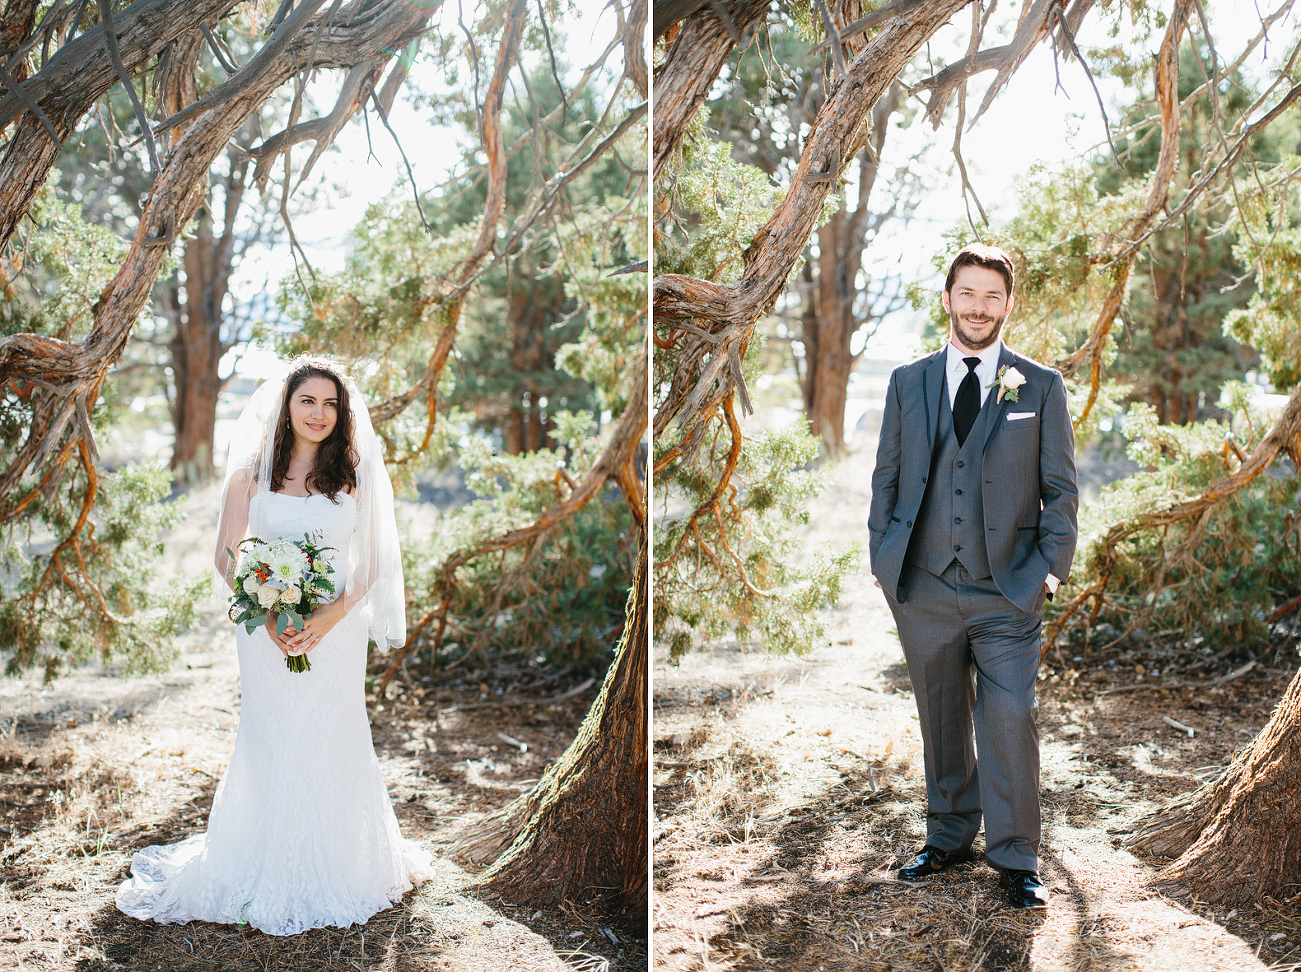 These are individual photos of Jenn and Jon at their Big Bear Lake wedding.